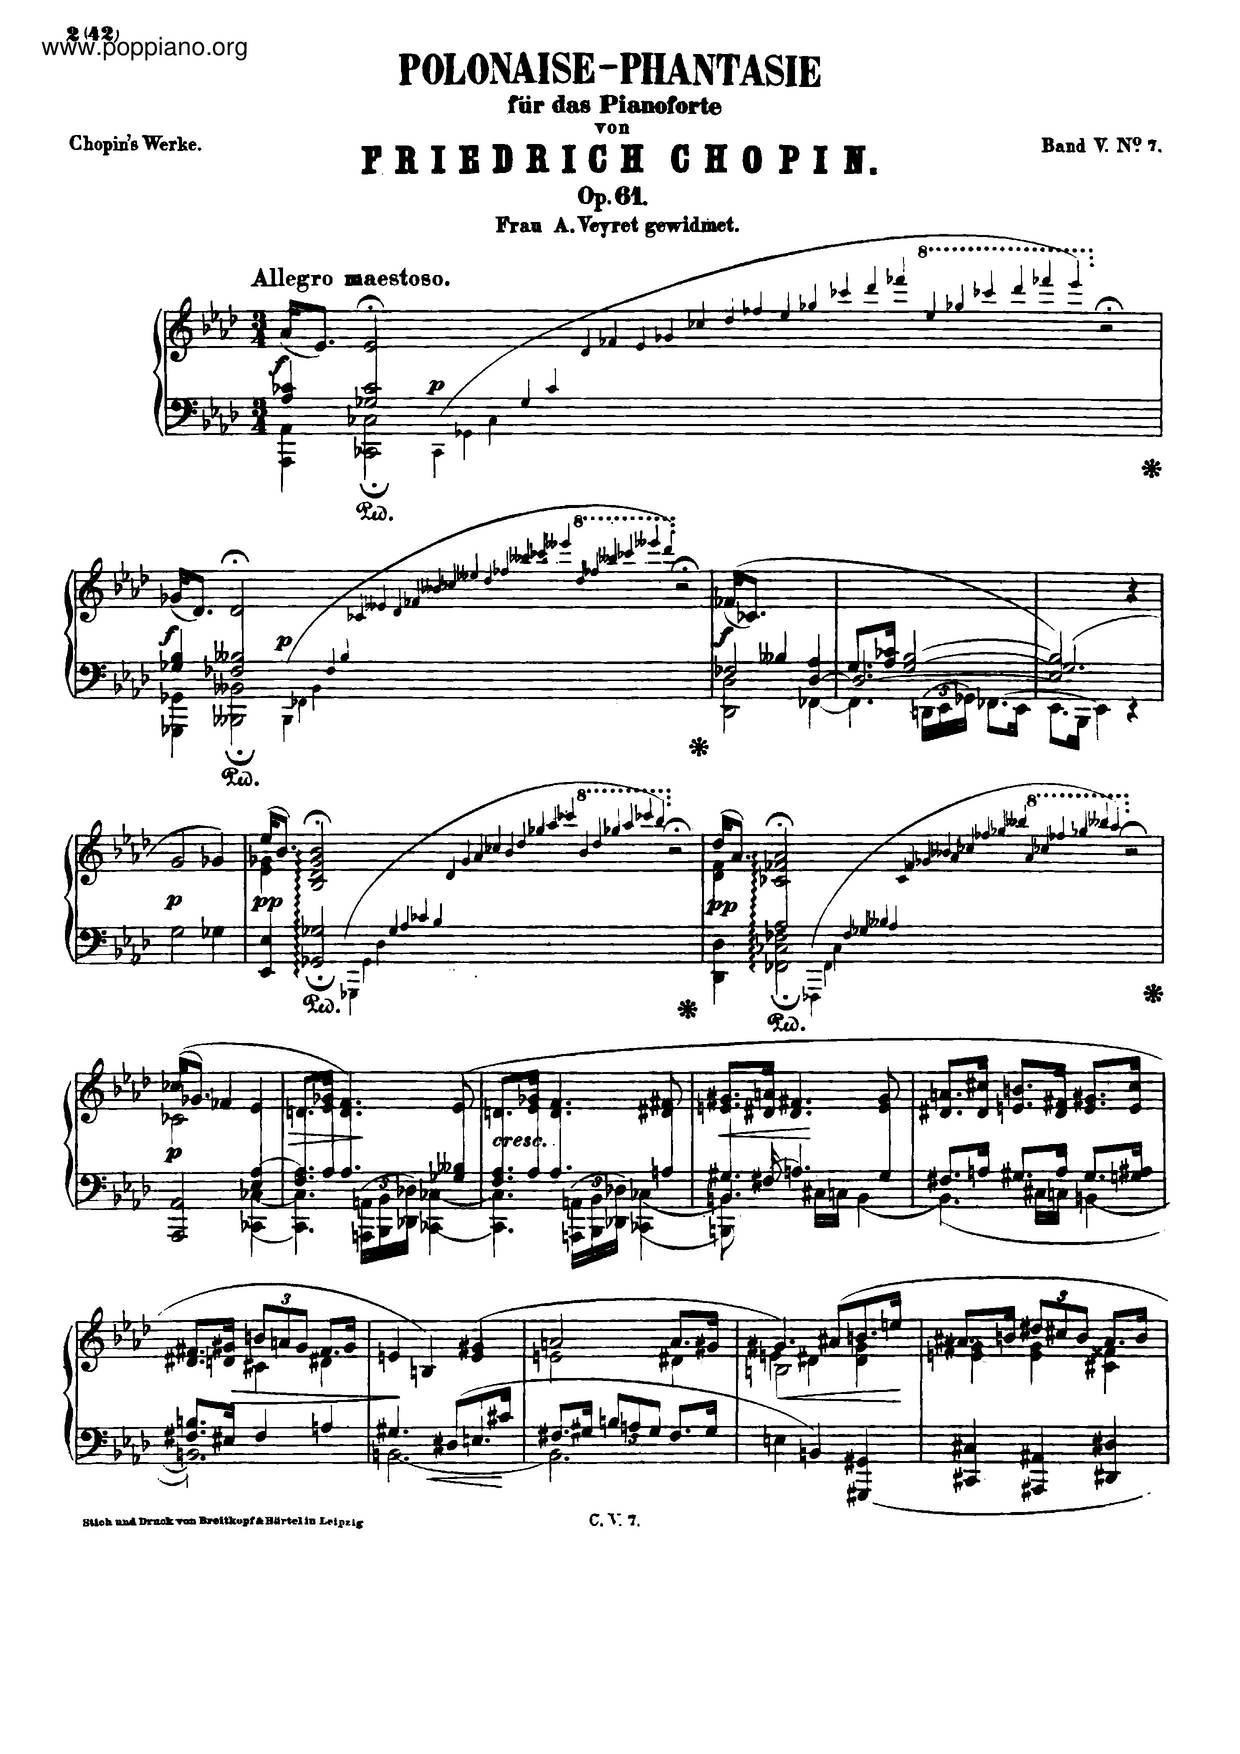 Polonaise-Fantaisie, Op. 61 Score